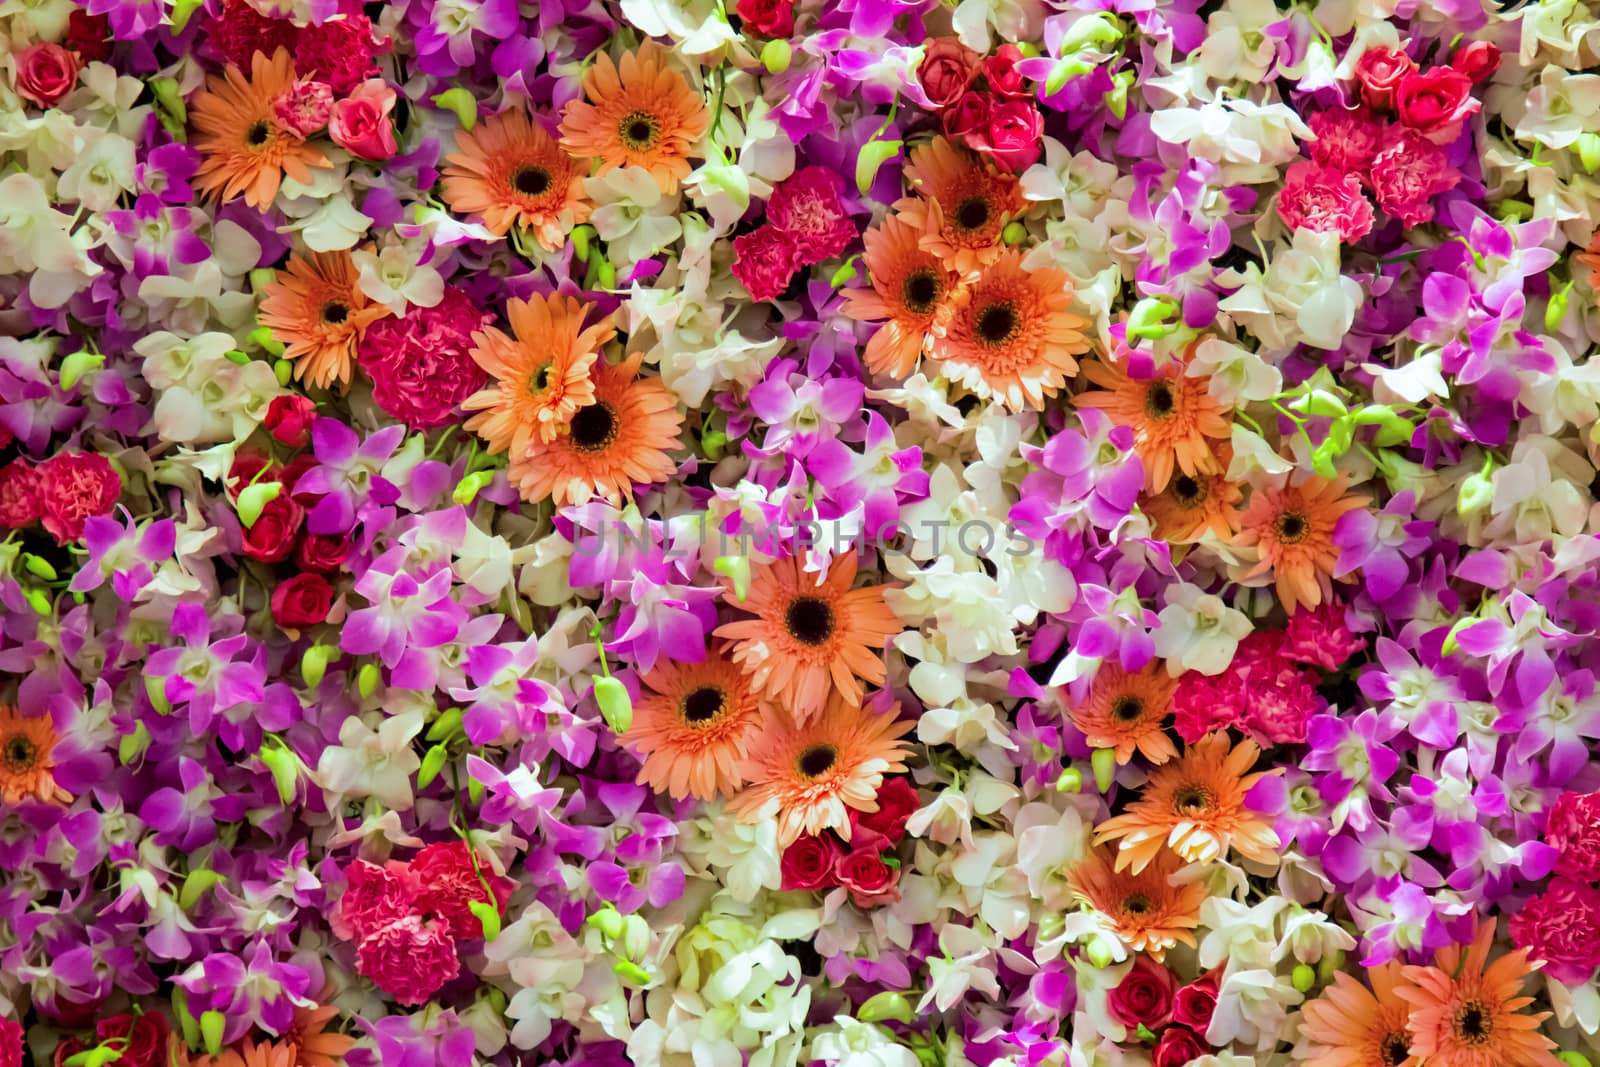 Flowers mixed in wedding scene by liewluck